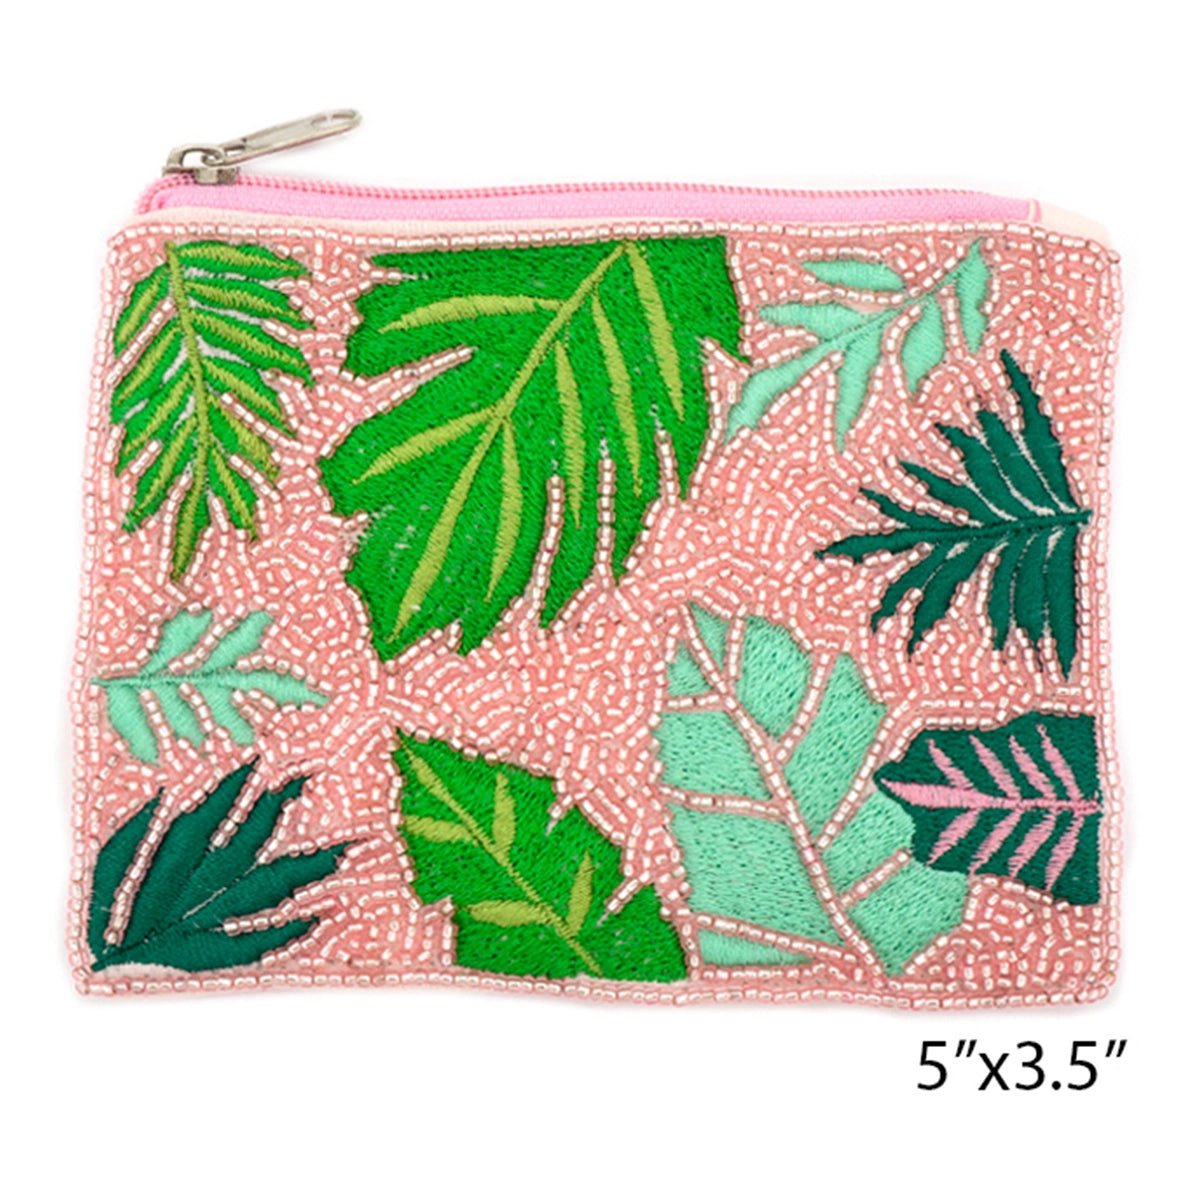 Handmade Seed Bead Palm Leaf Zipper Closure Coin Bag